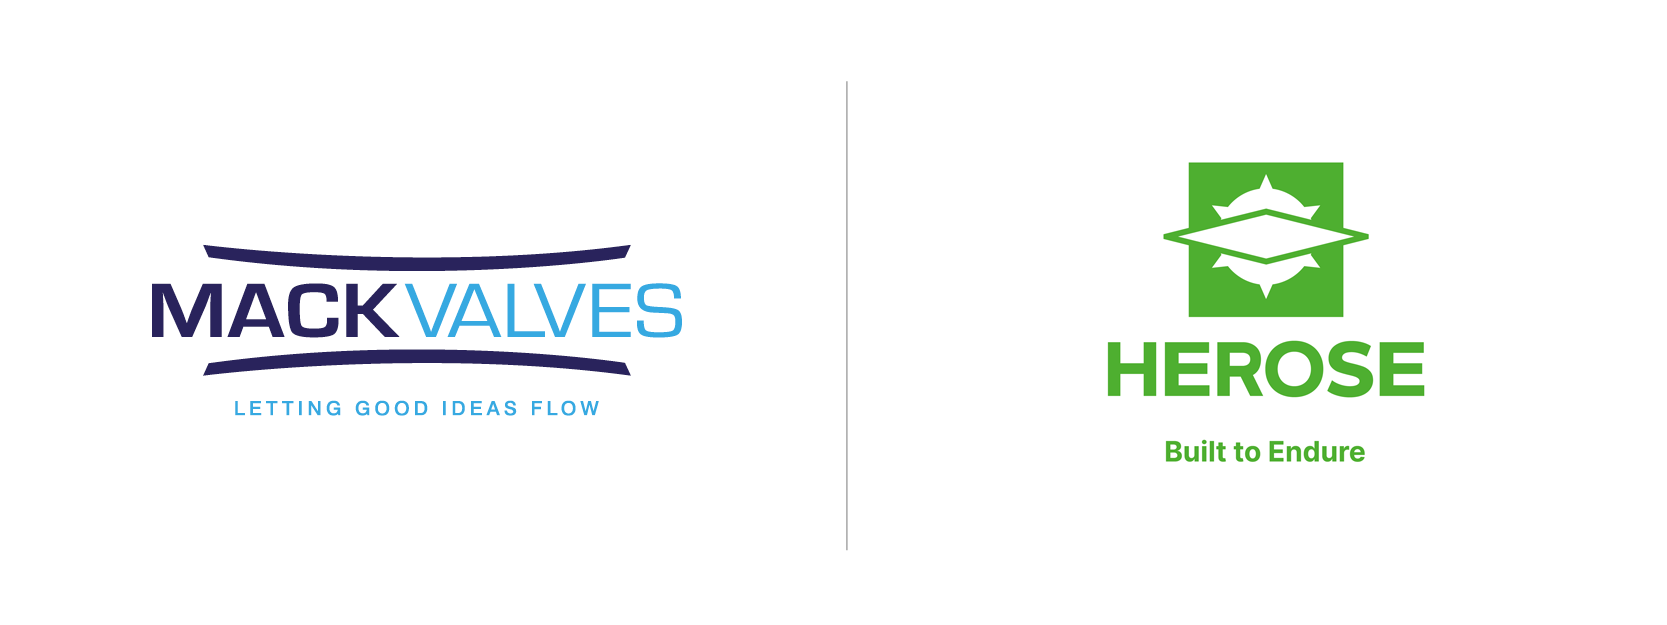 HEROSE and Mack Valves logos on a white background